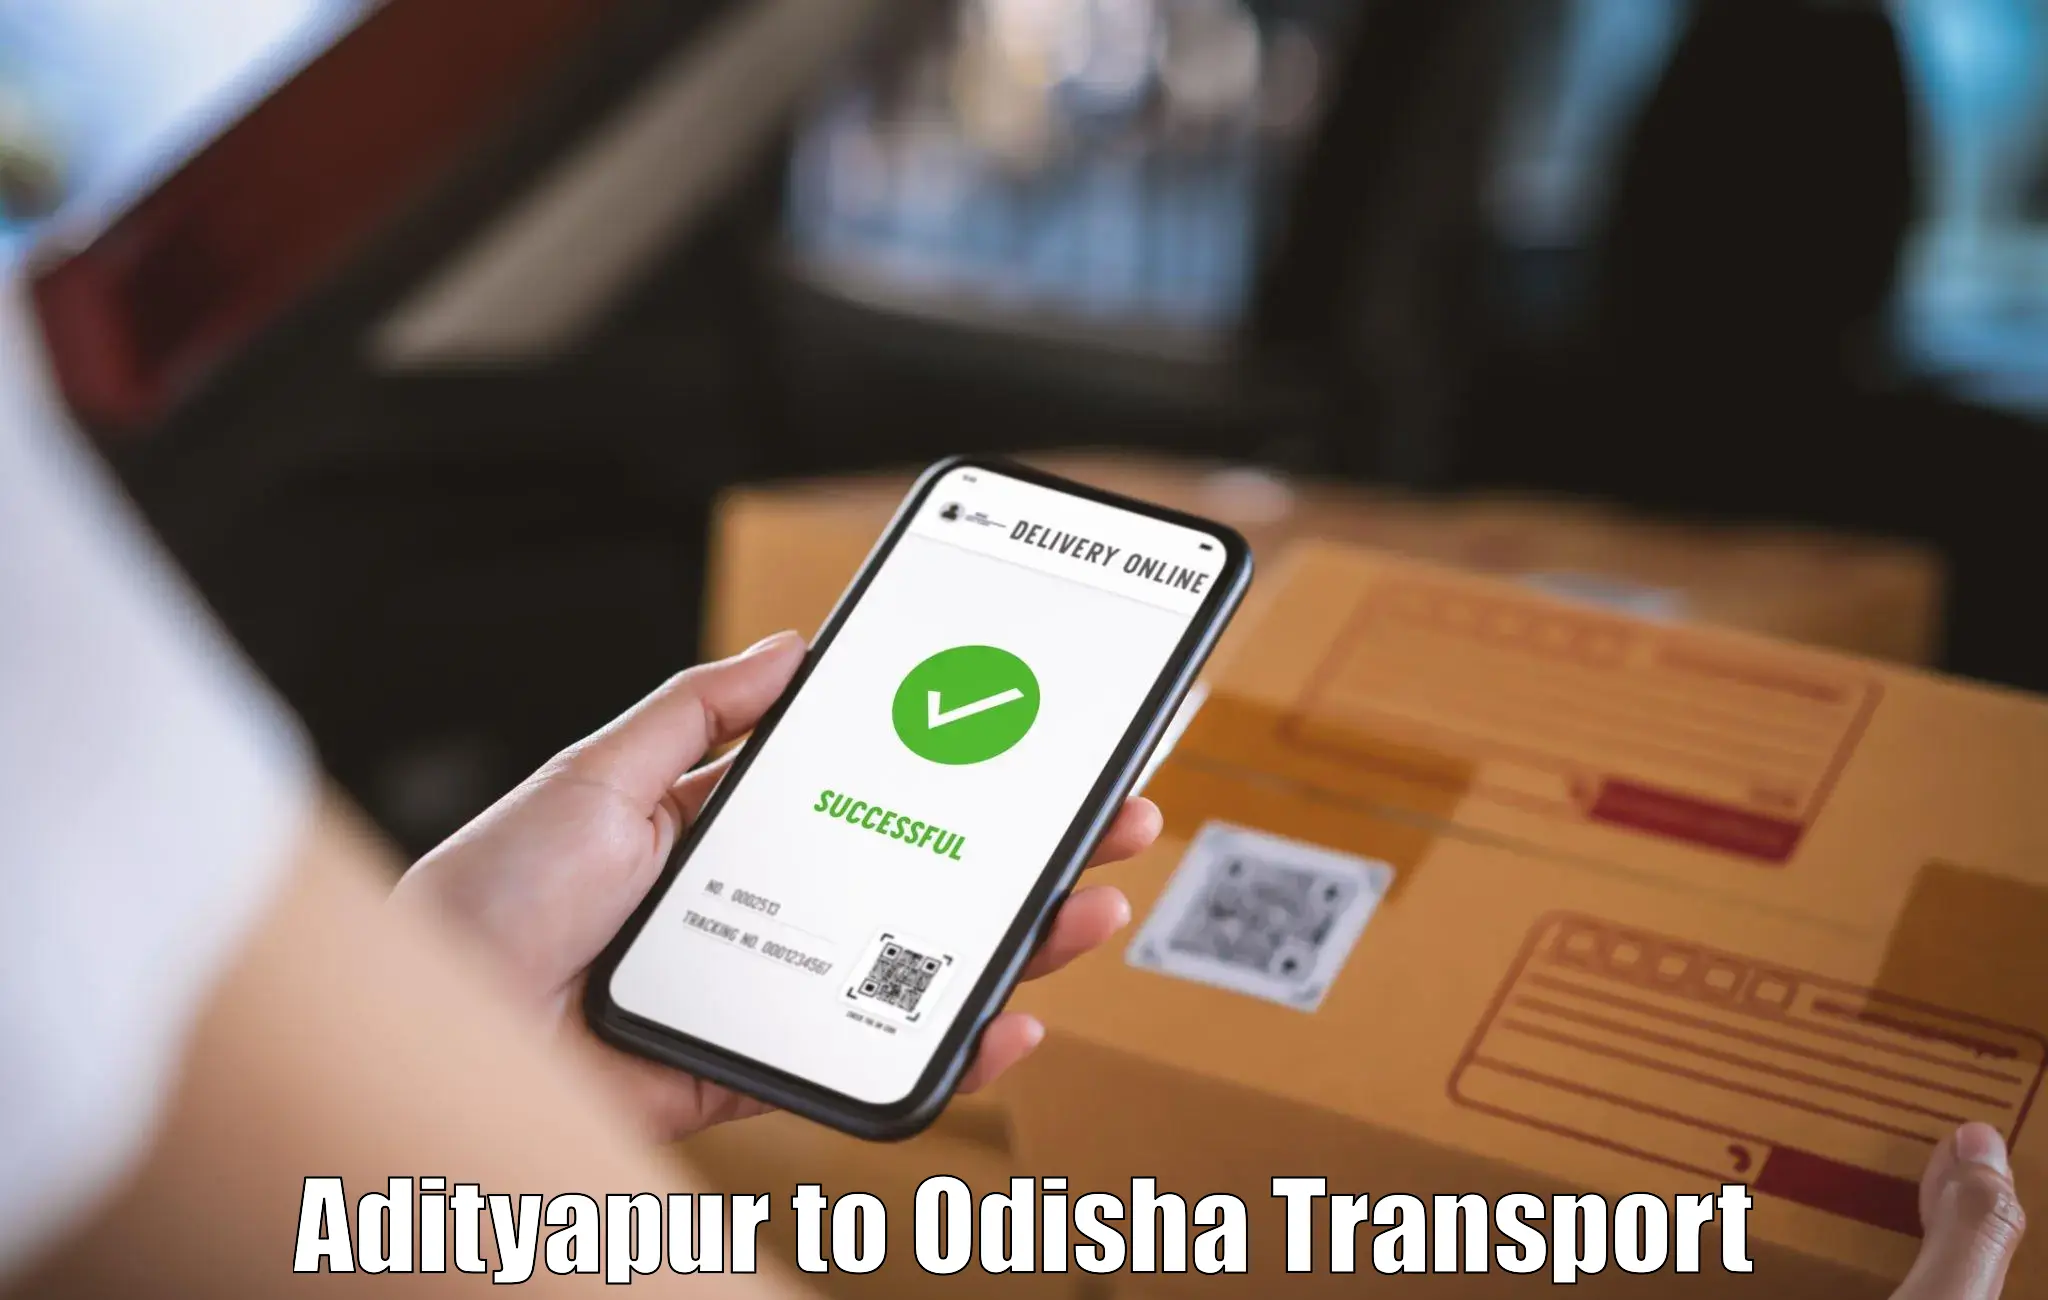 Daily transport service Adityapur to Mangalpur